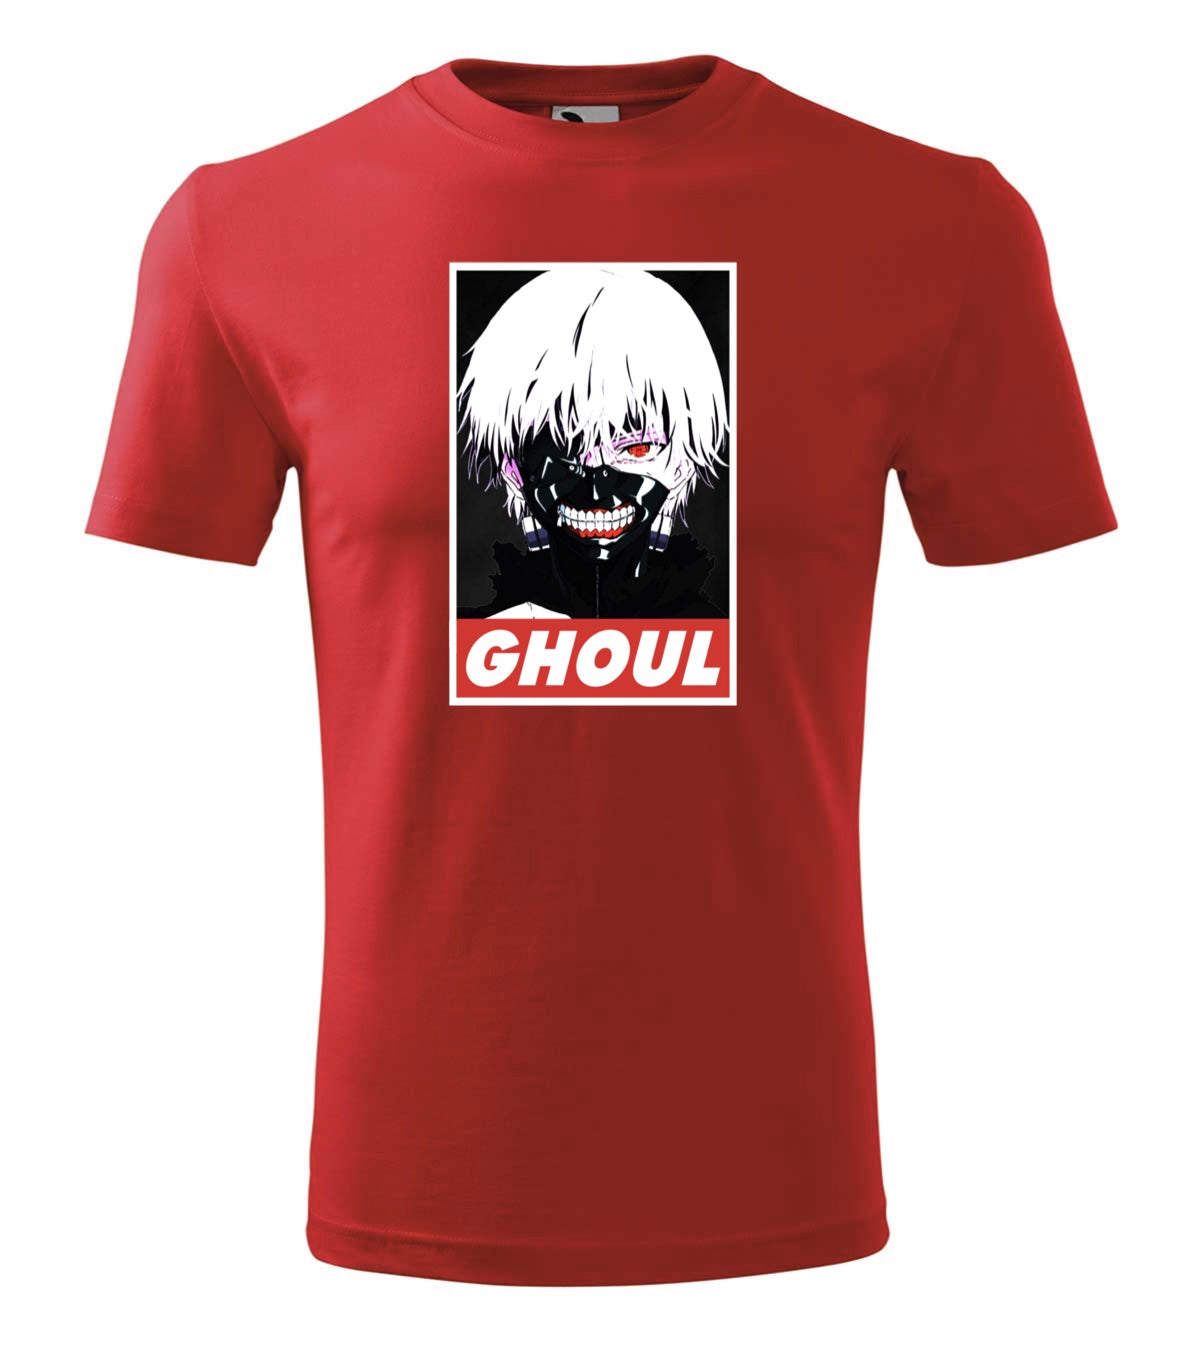 Ghoul gyerek póló